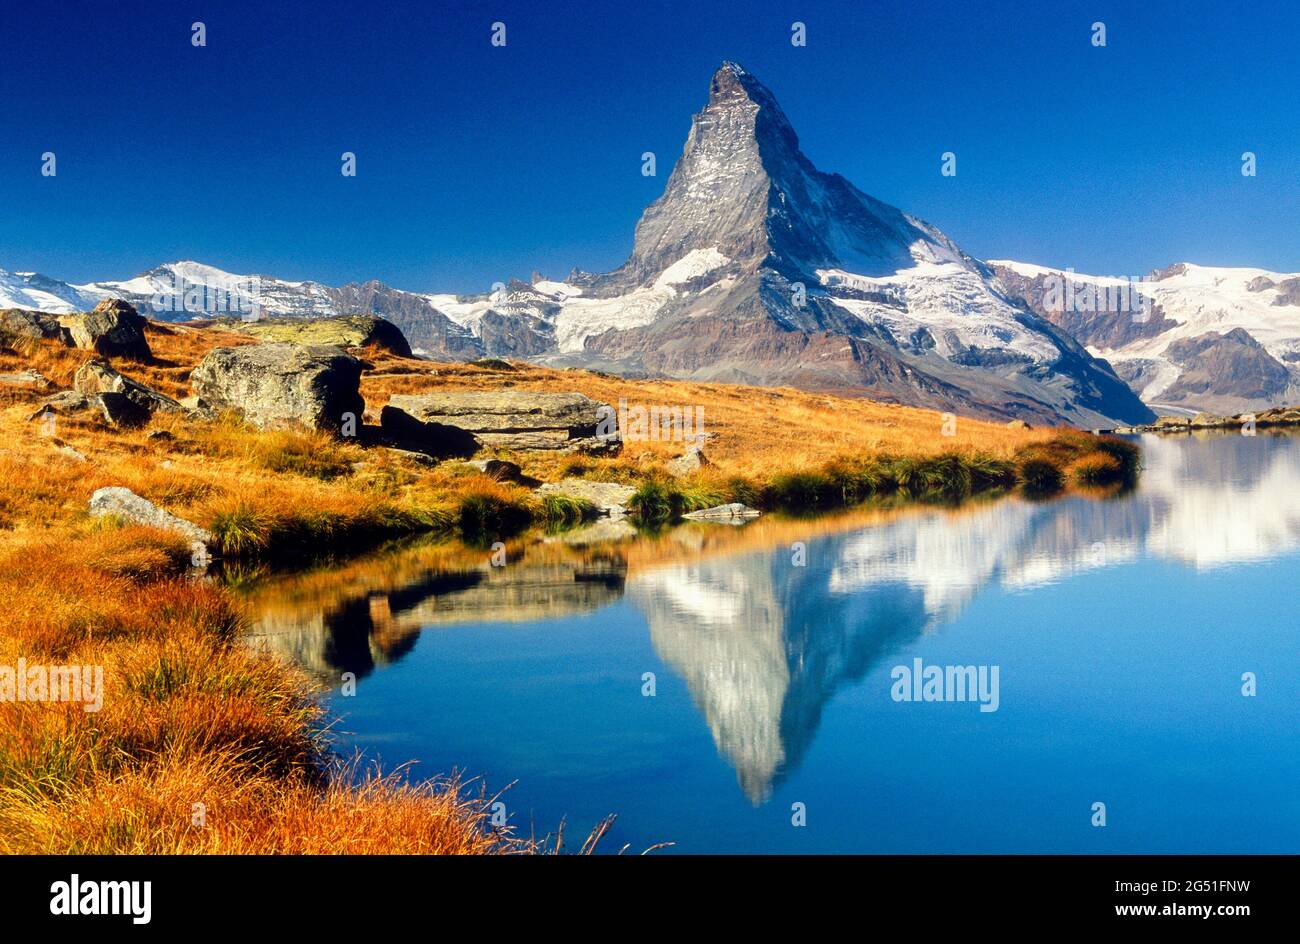 View of lake with mountain reflected in water, Matterhorn, Zermatt, Switzerland Stock Photo